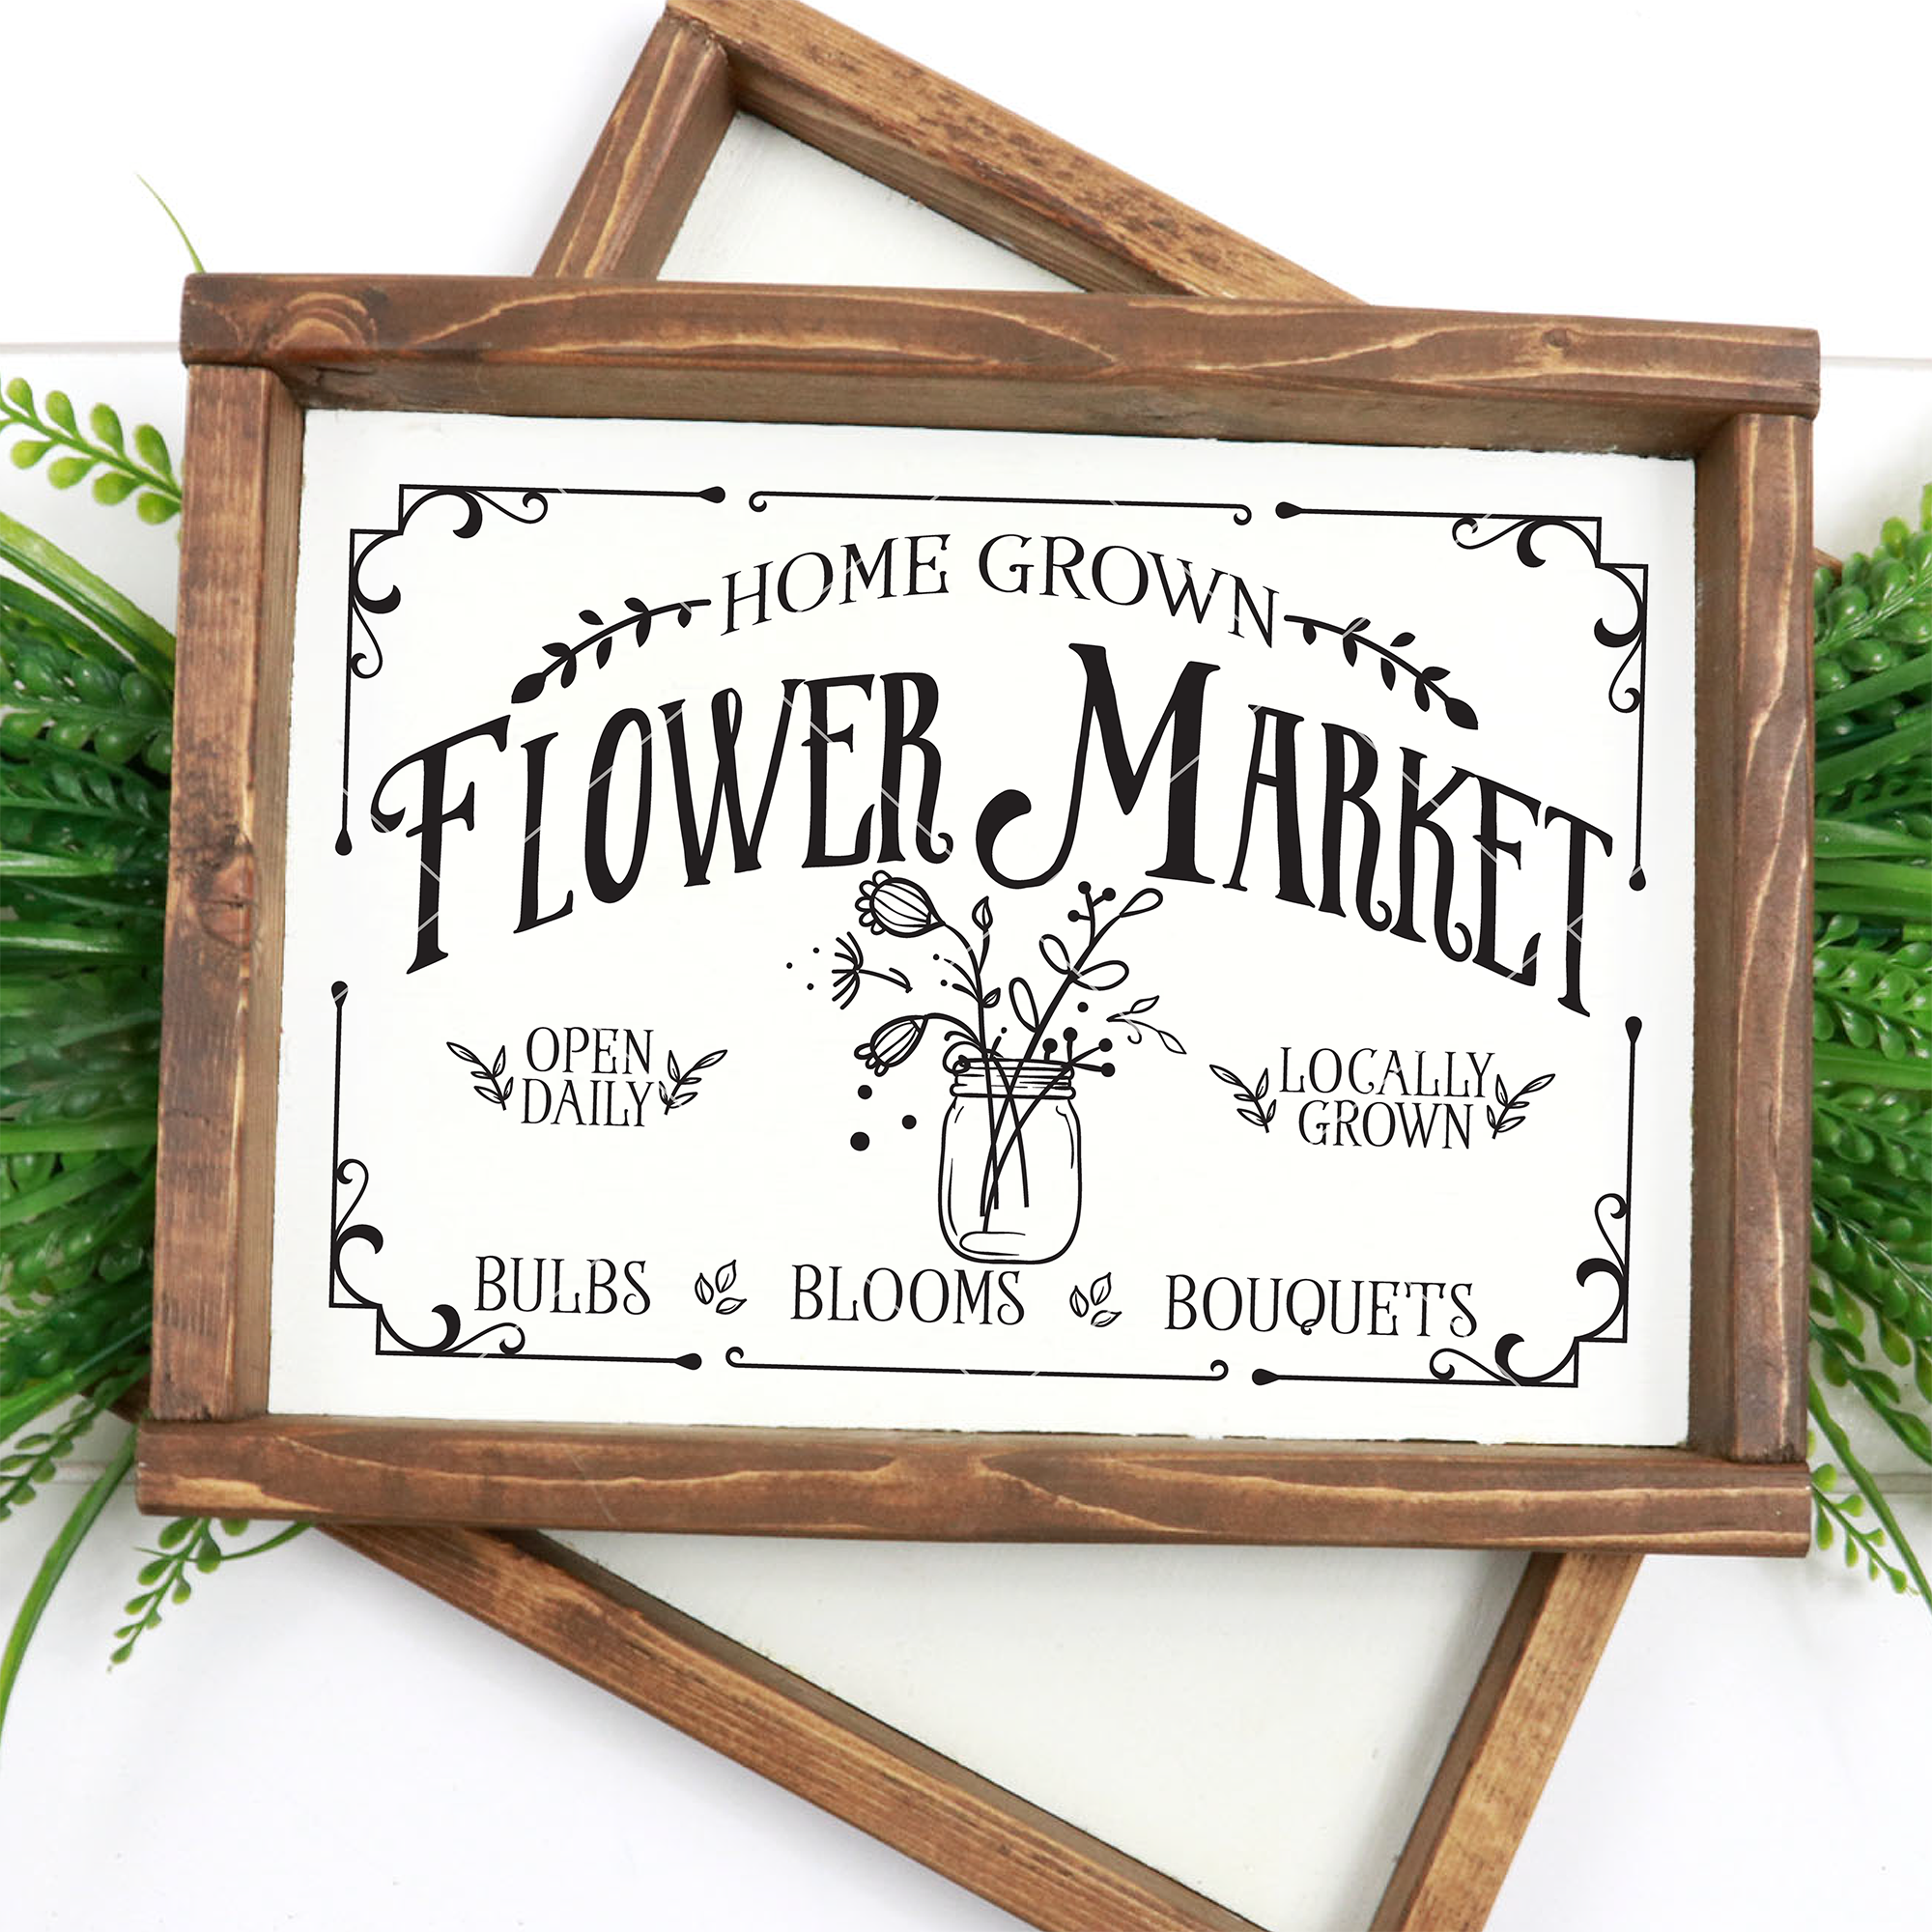 Vintage Flower Market Sign SVG File for Cricut/Silhouette - Commercial Use SVG Files for Cricut & Silhouette